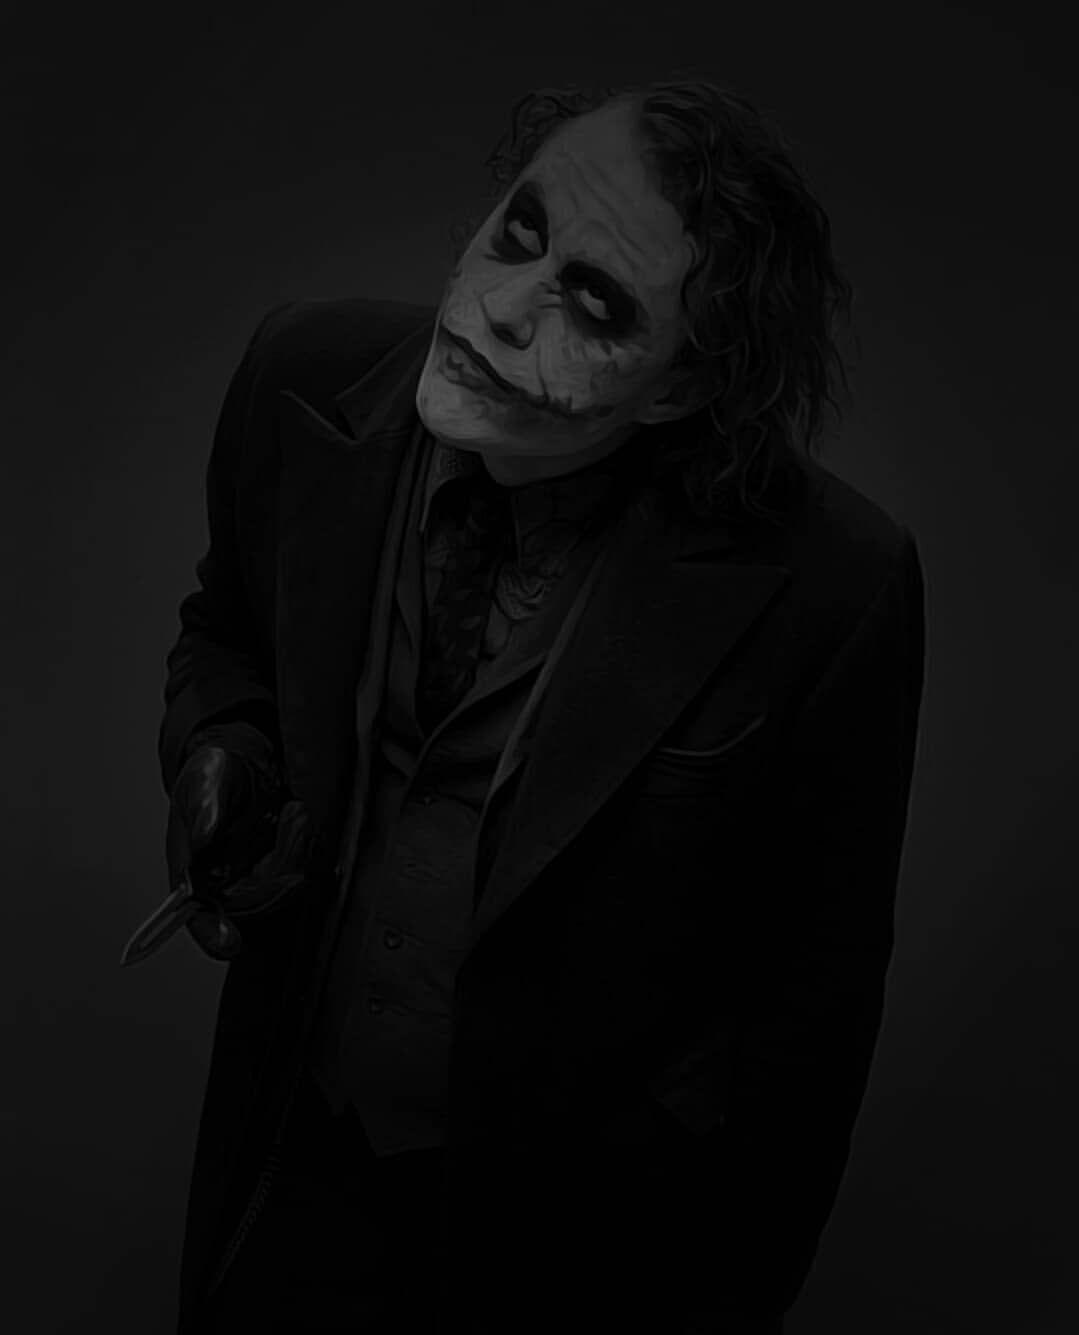 Joker Hd Wallpaper 4K Black And White - Discover the ultimate ...